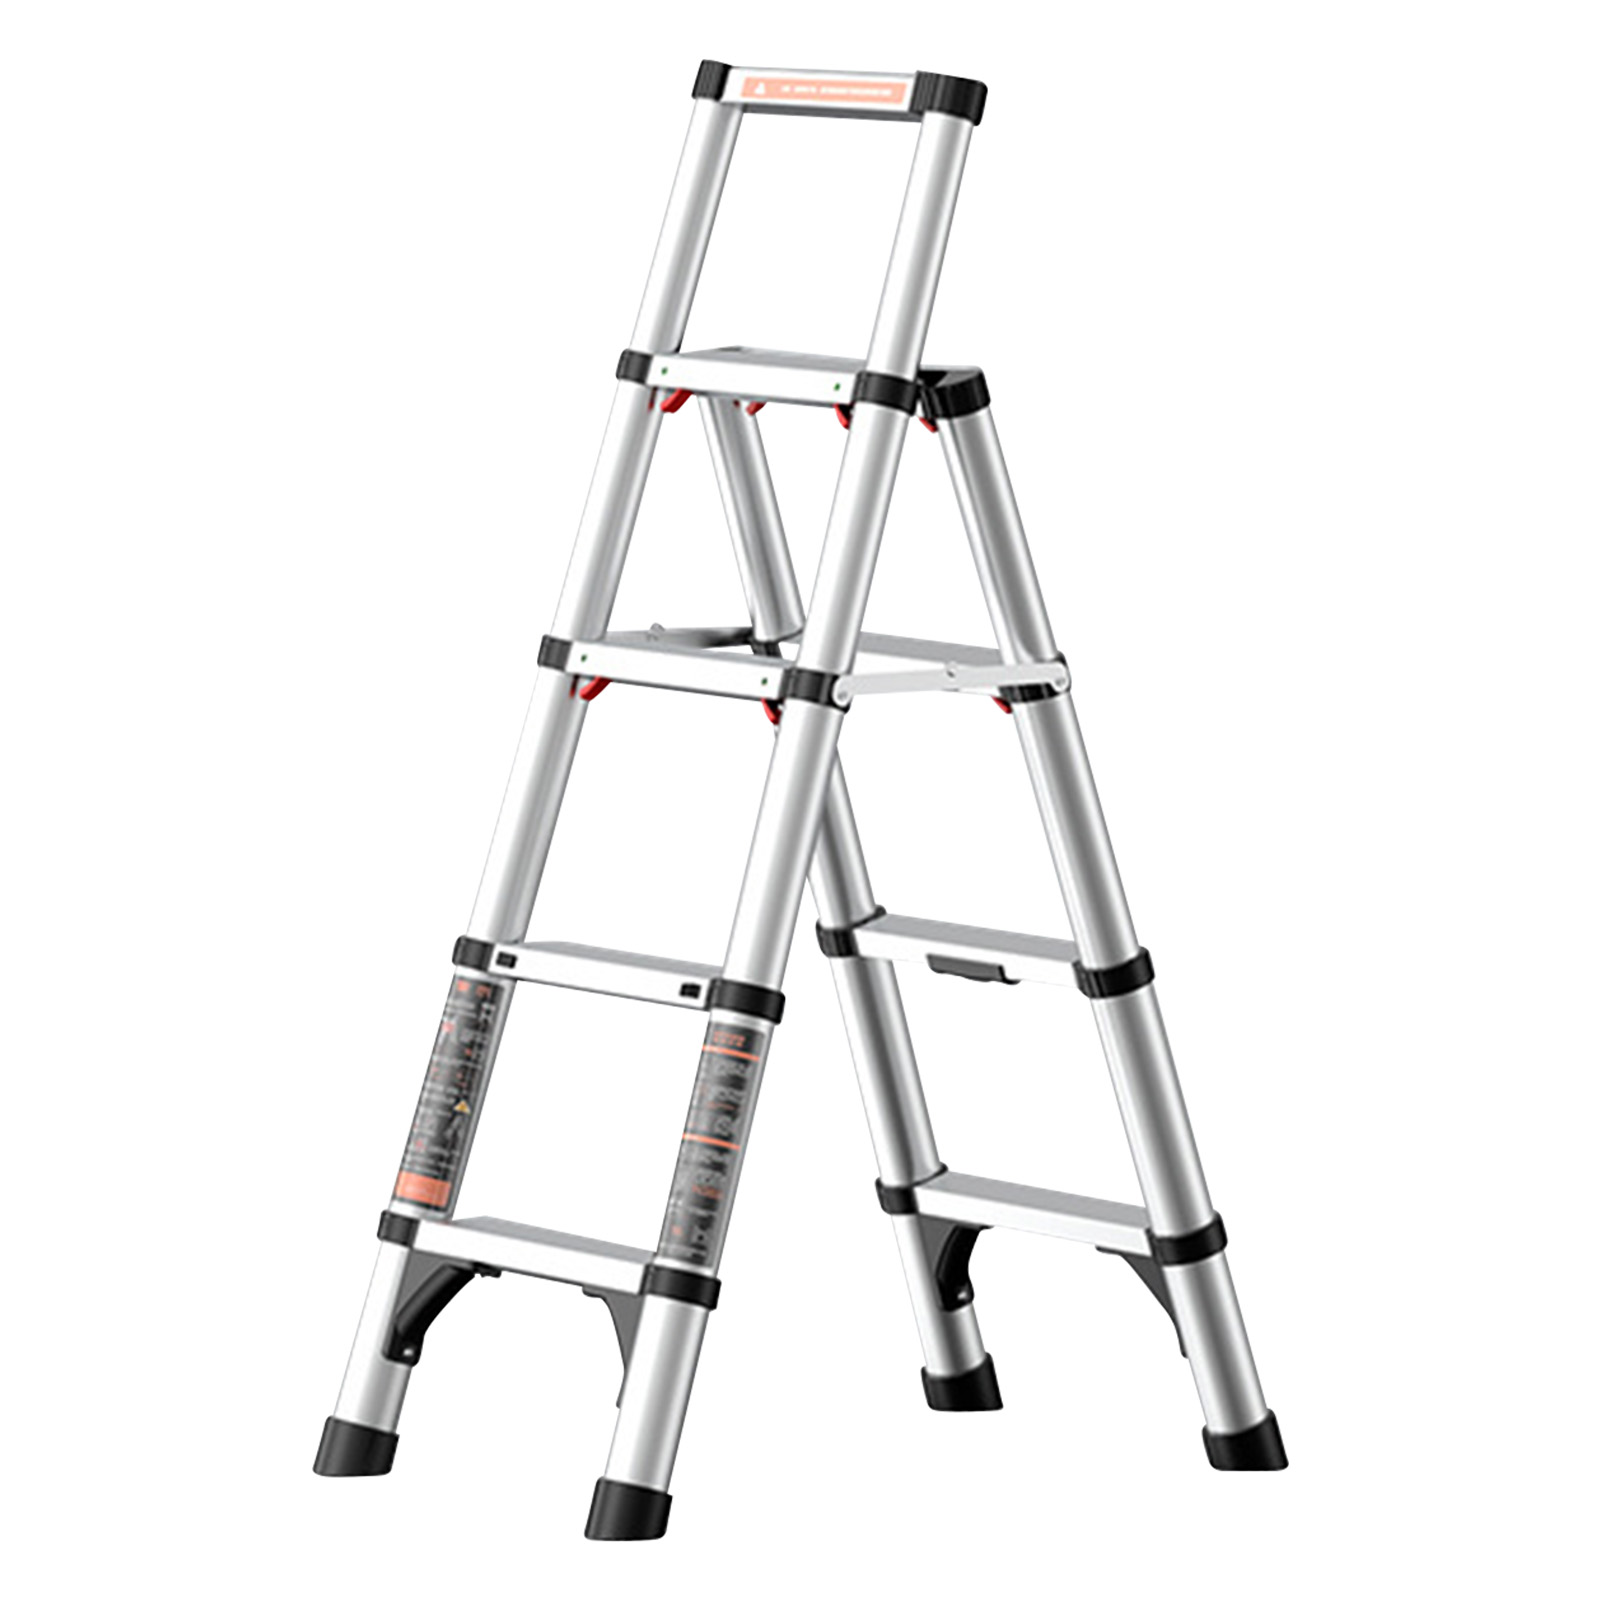 Silver four-step ladder